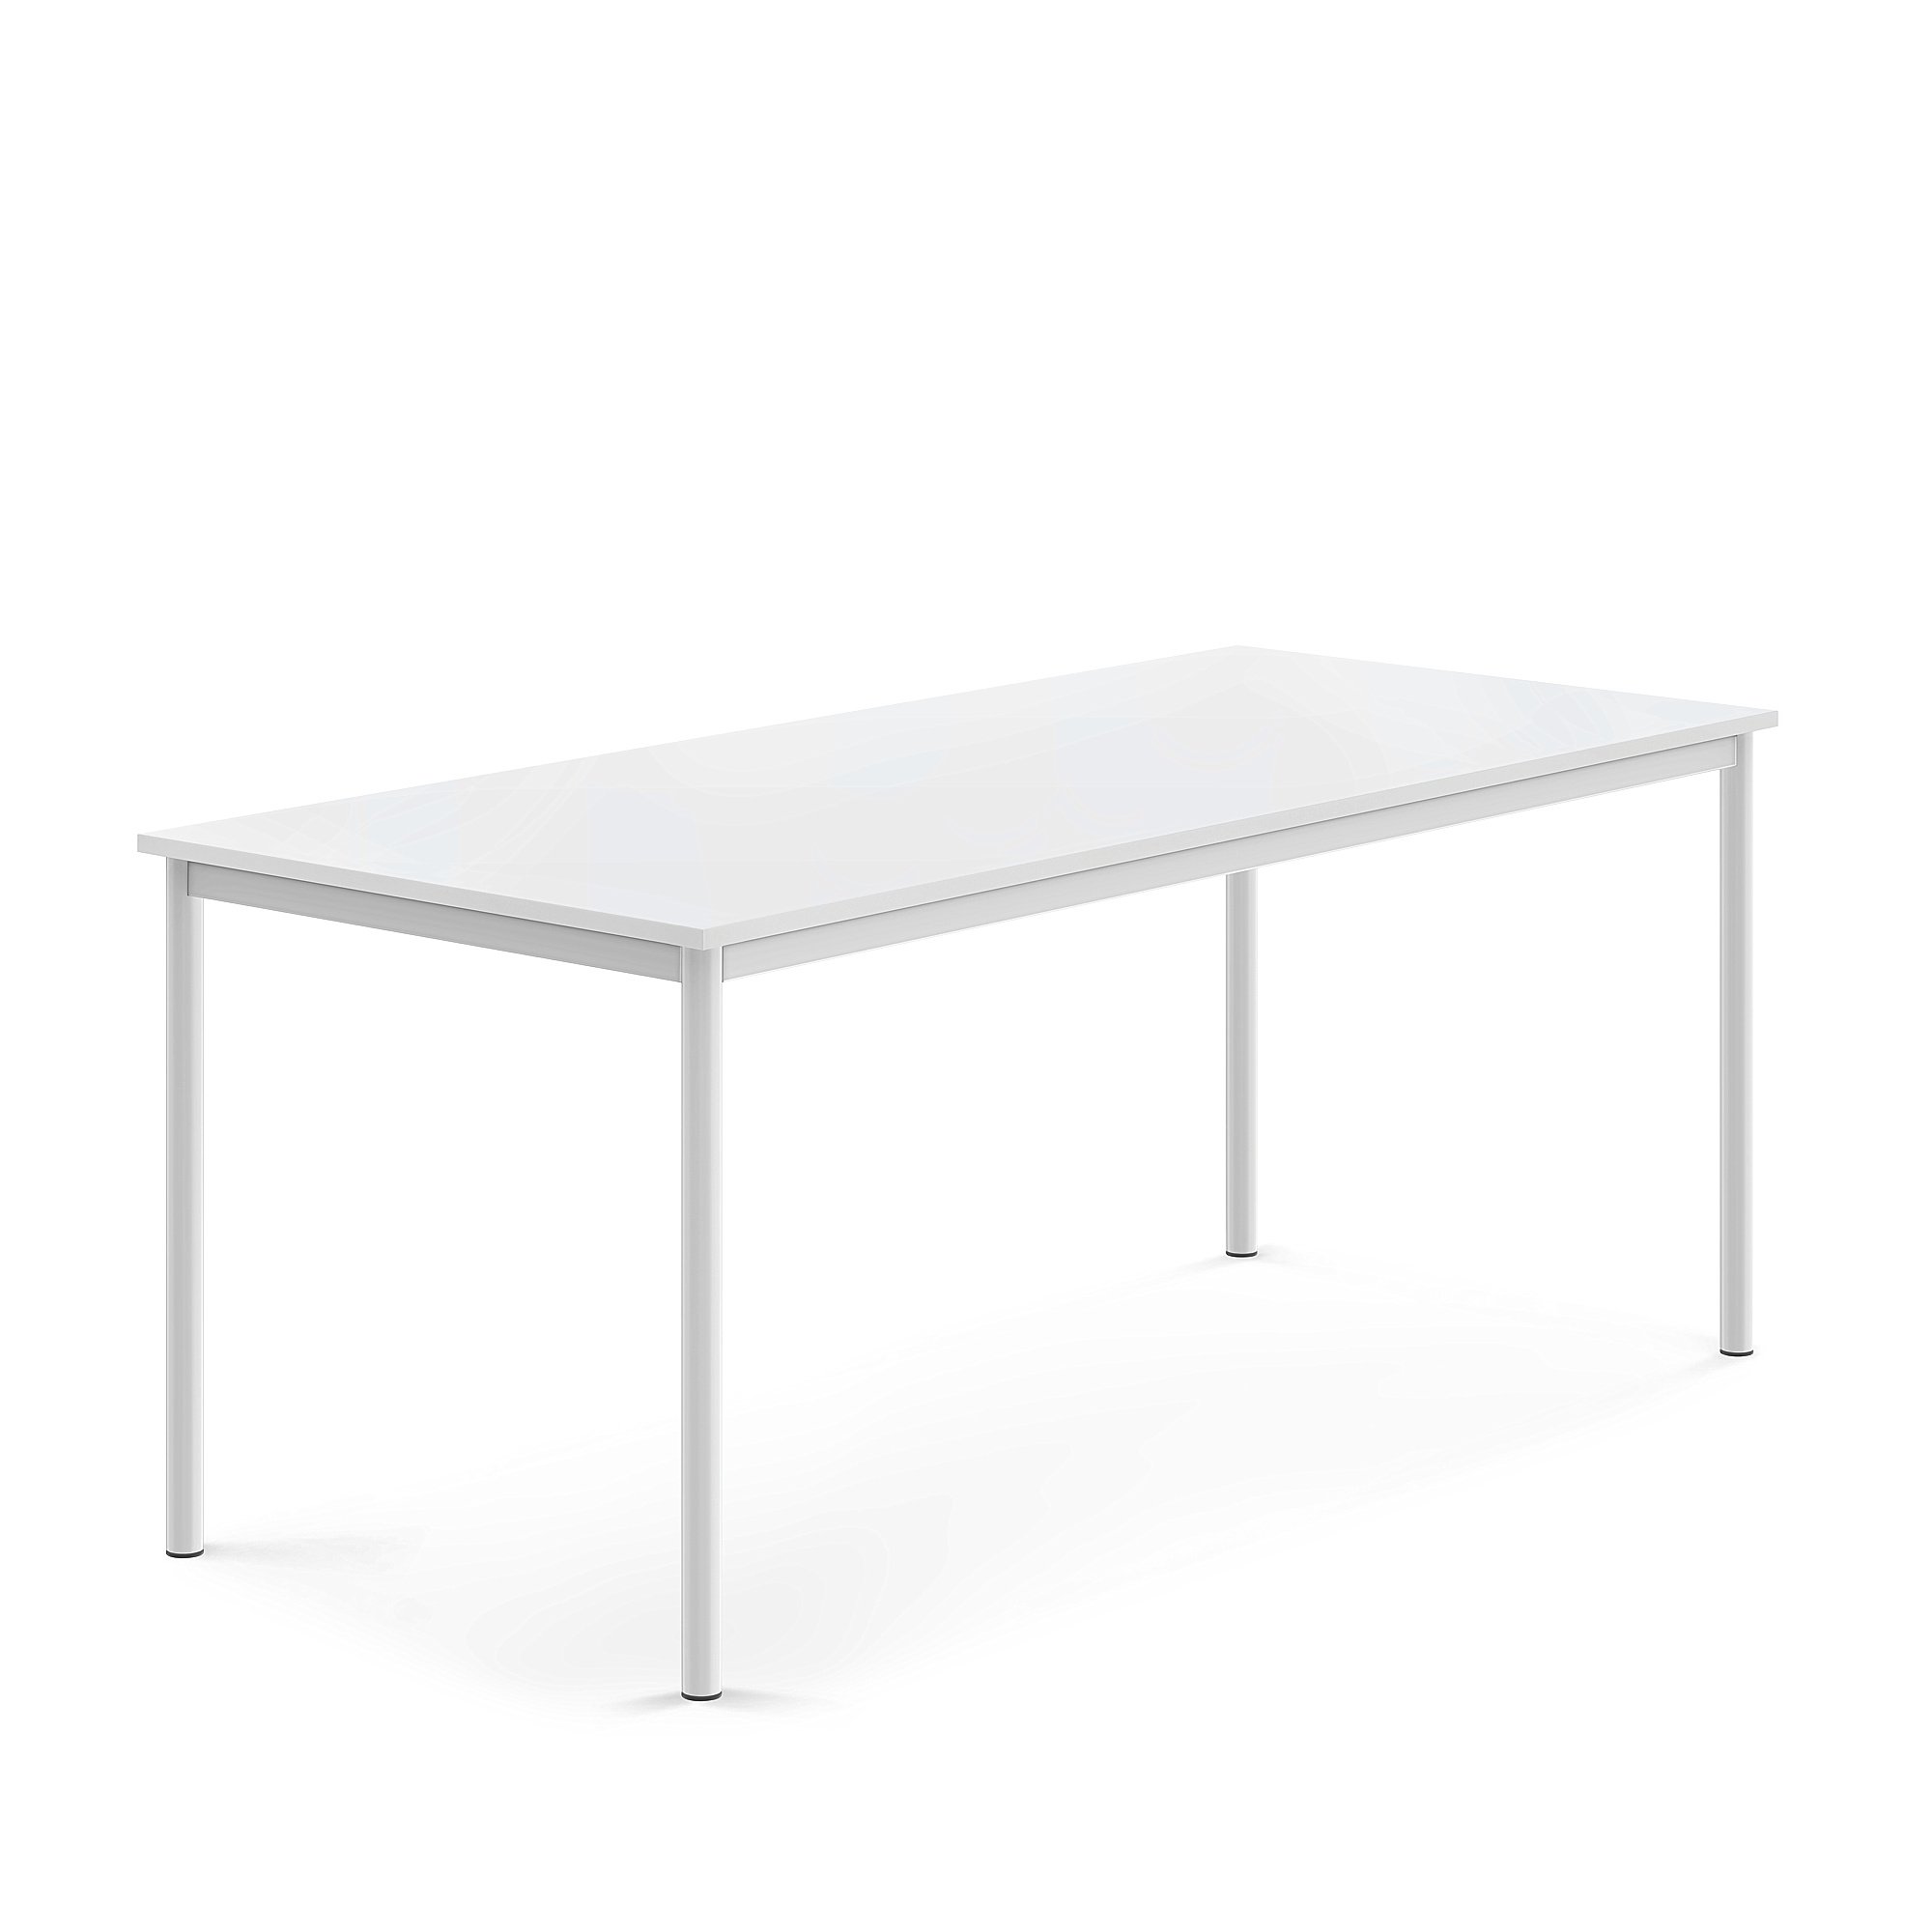 Stůl SONITUS, 1800x800x720 mm, bílé nohy, HPL deska tlumící hluk, bílá